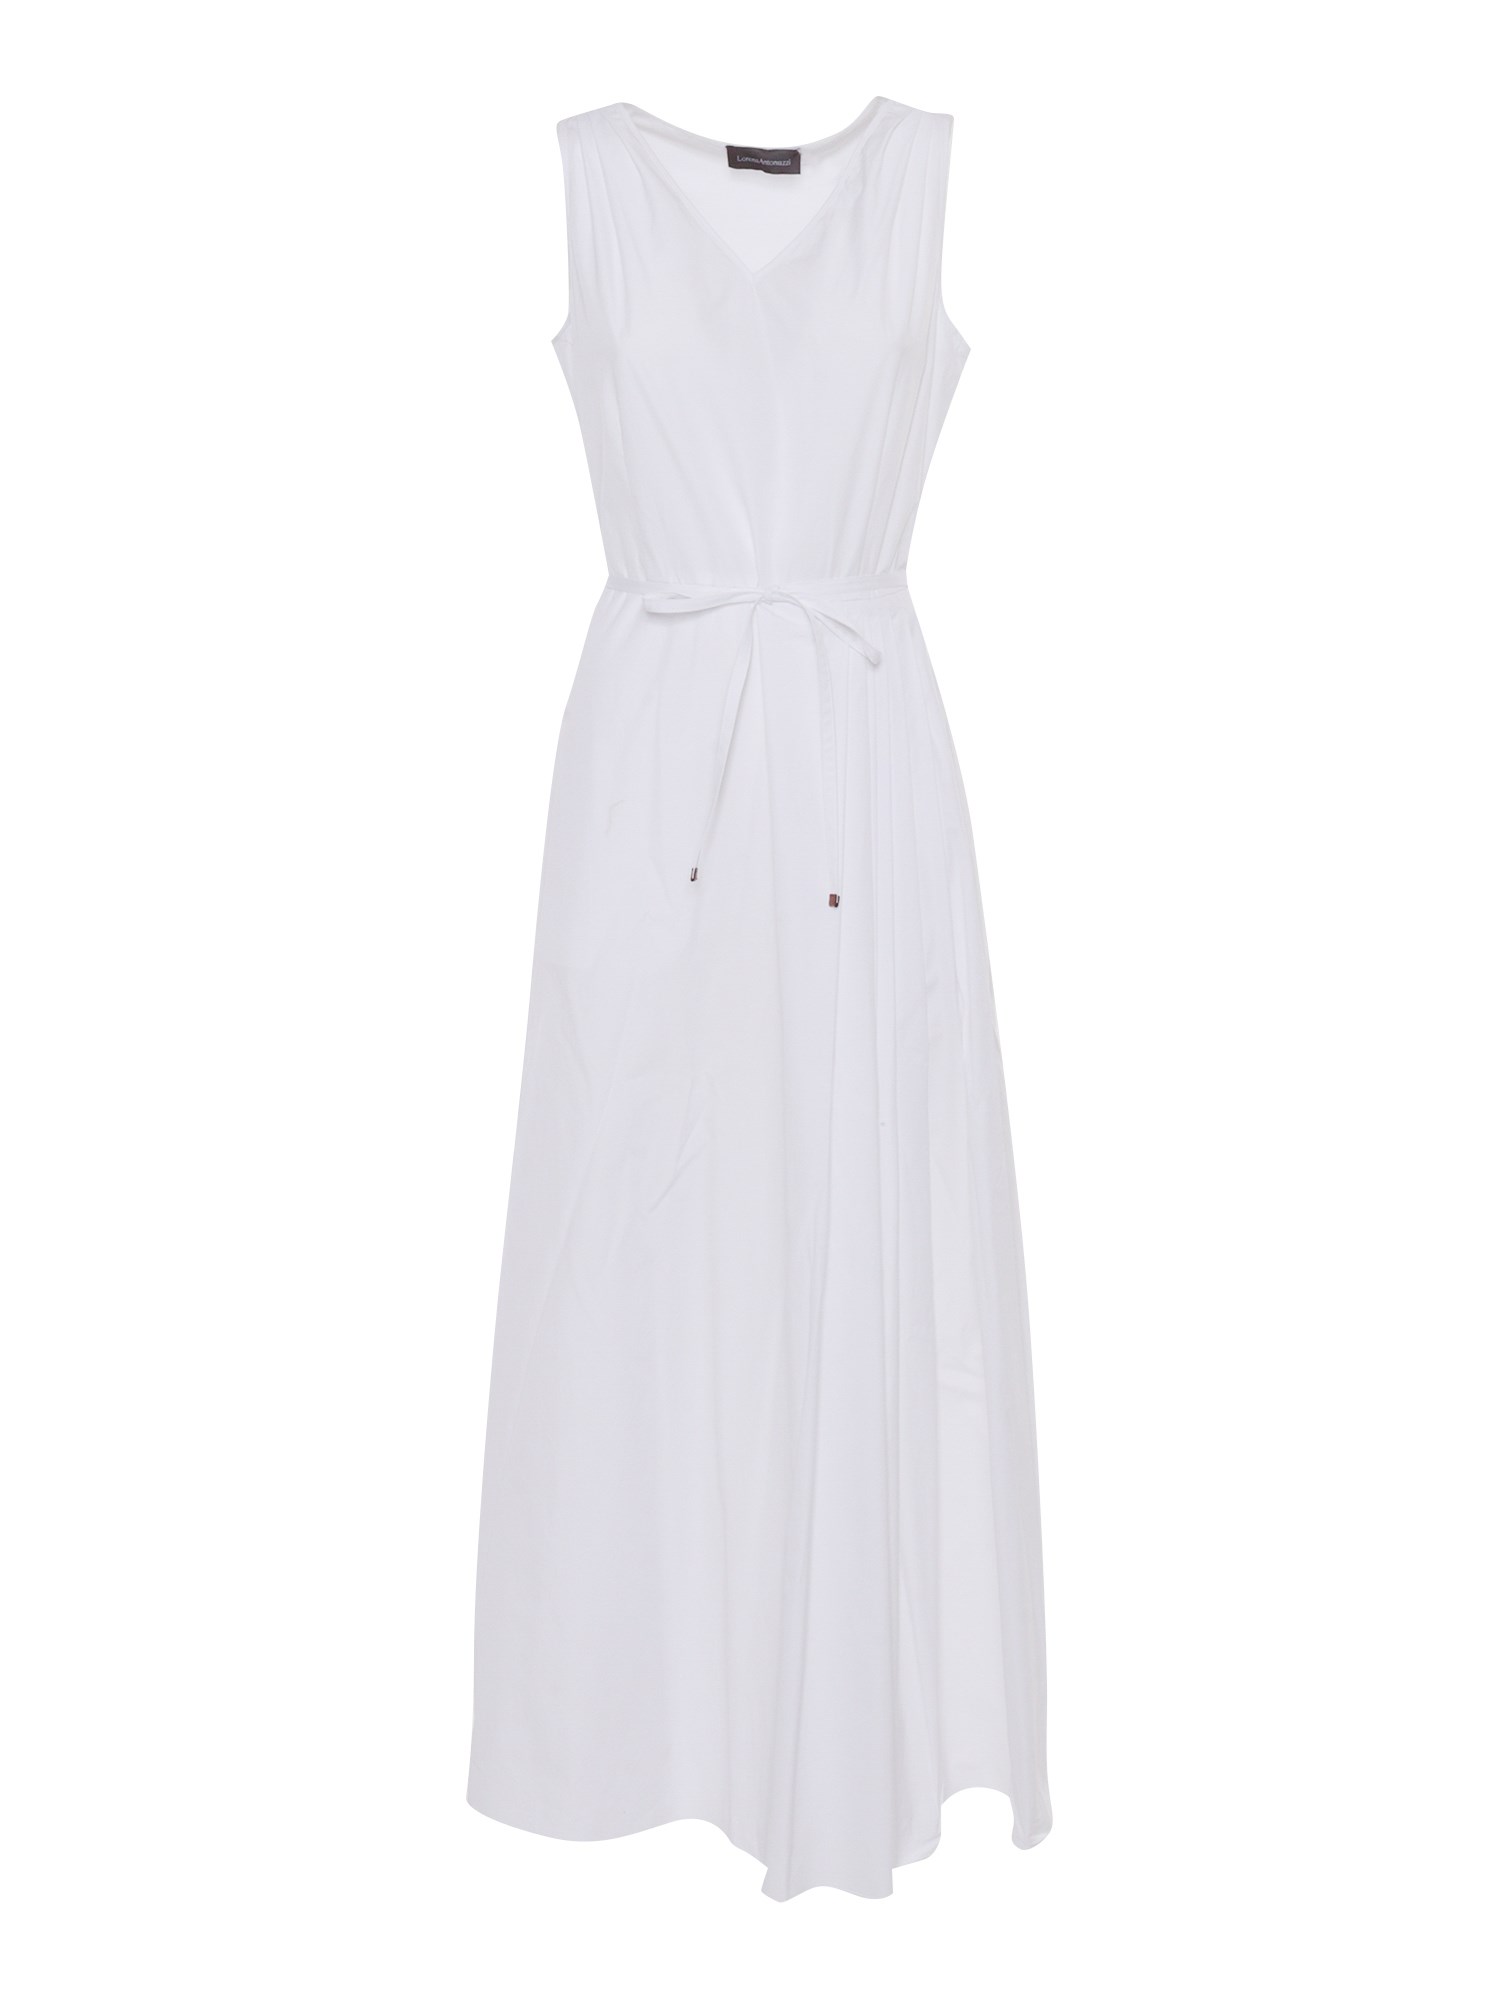 Lorena Antoniazzi Long White Dress